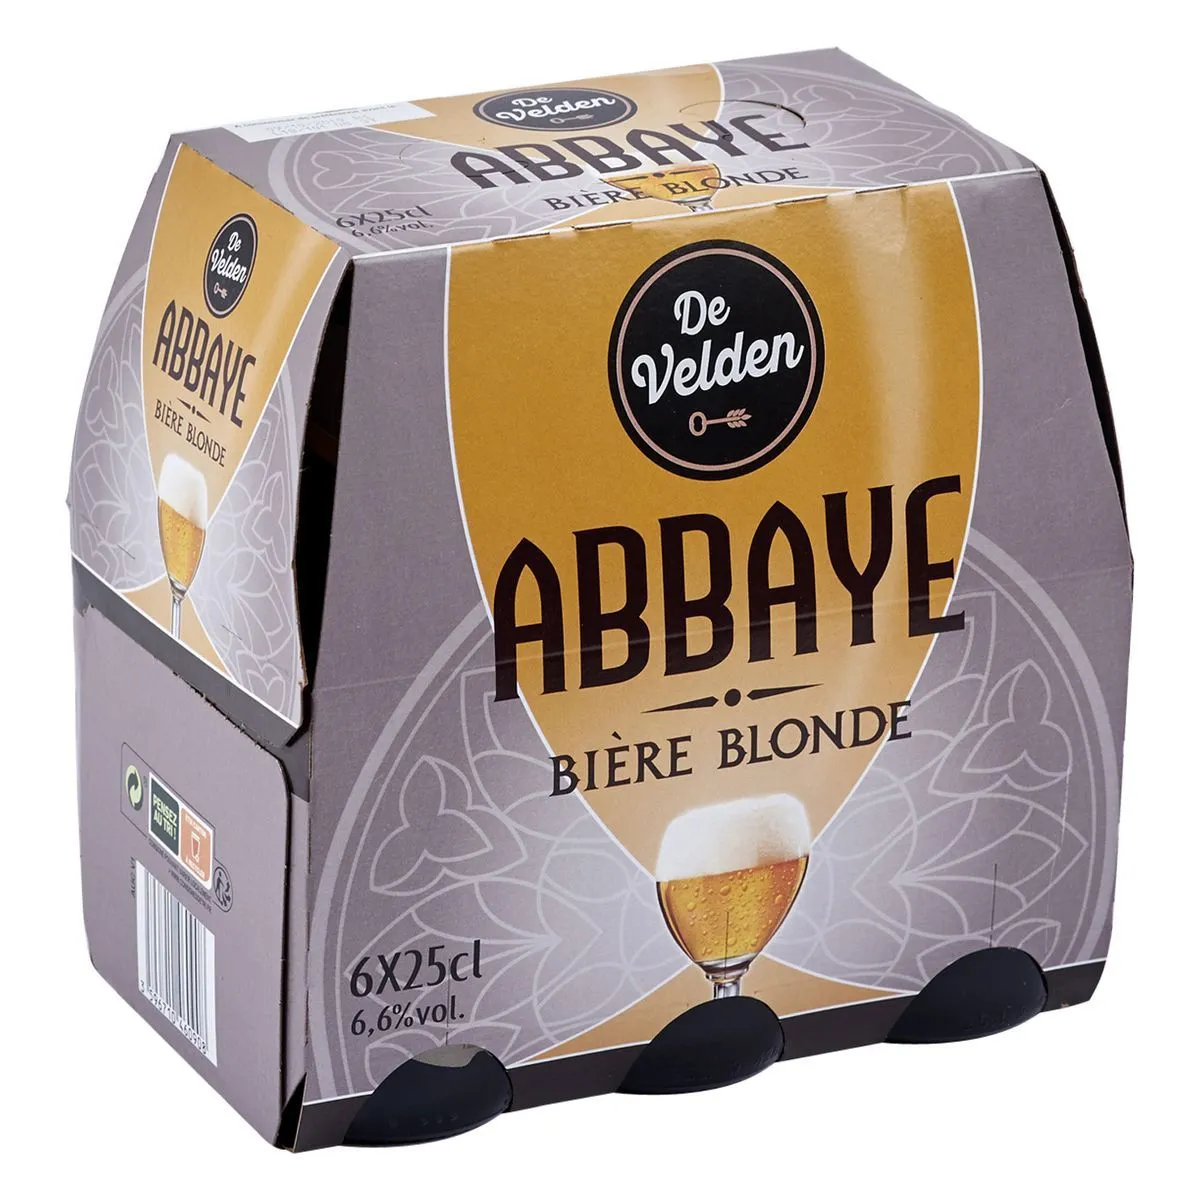 bière blonde abbaye de velden